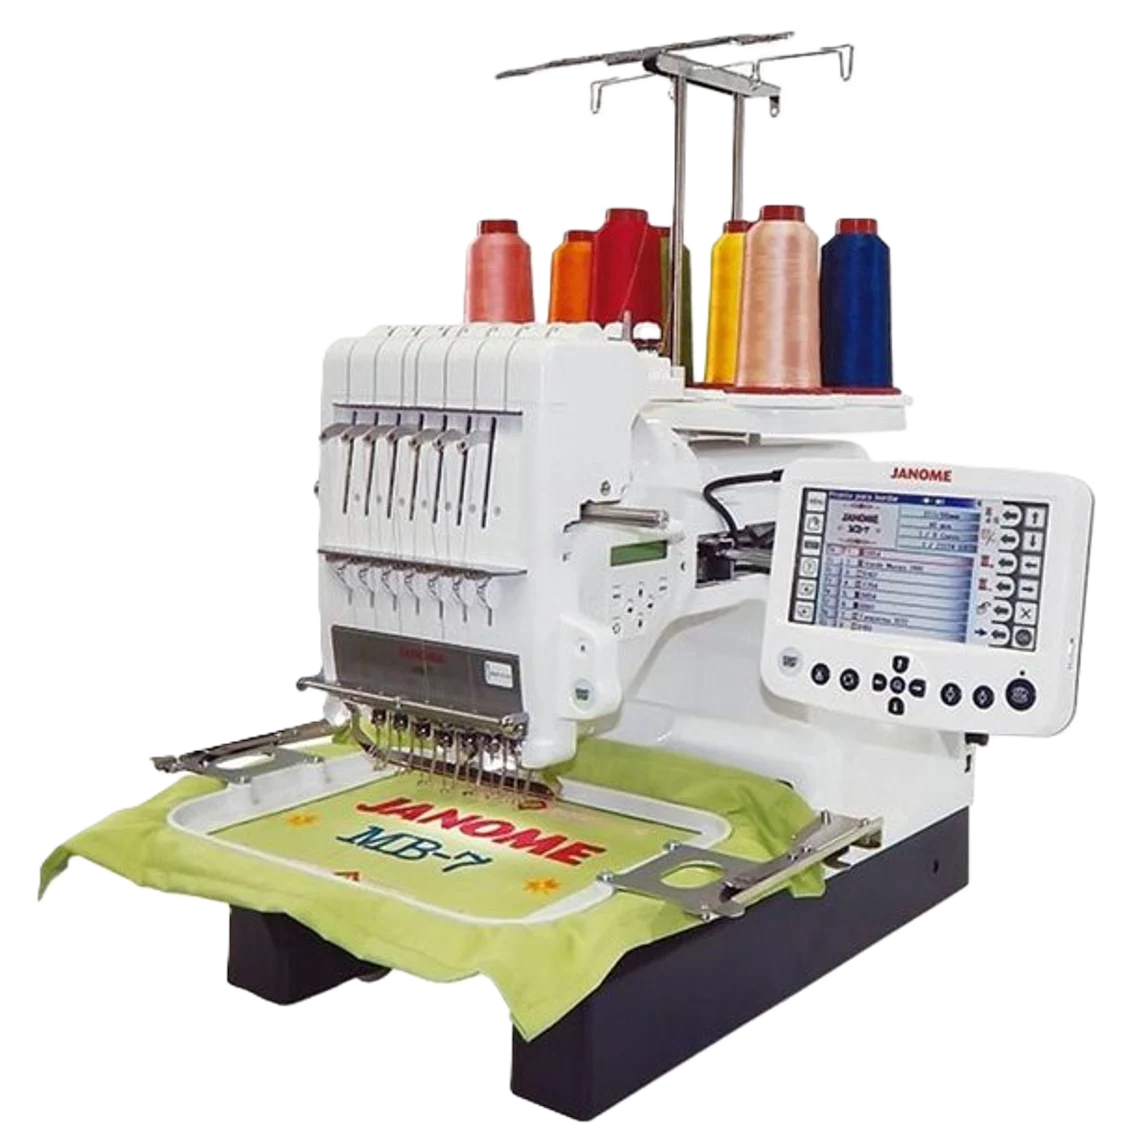 Janome MB7 Seven Needle Embroidery Machine 9.4 x 7.9